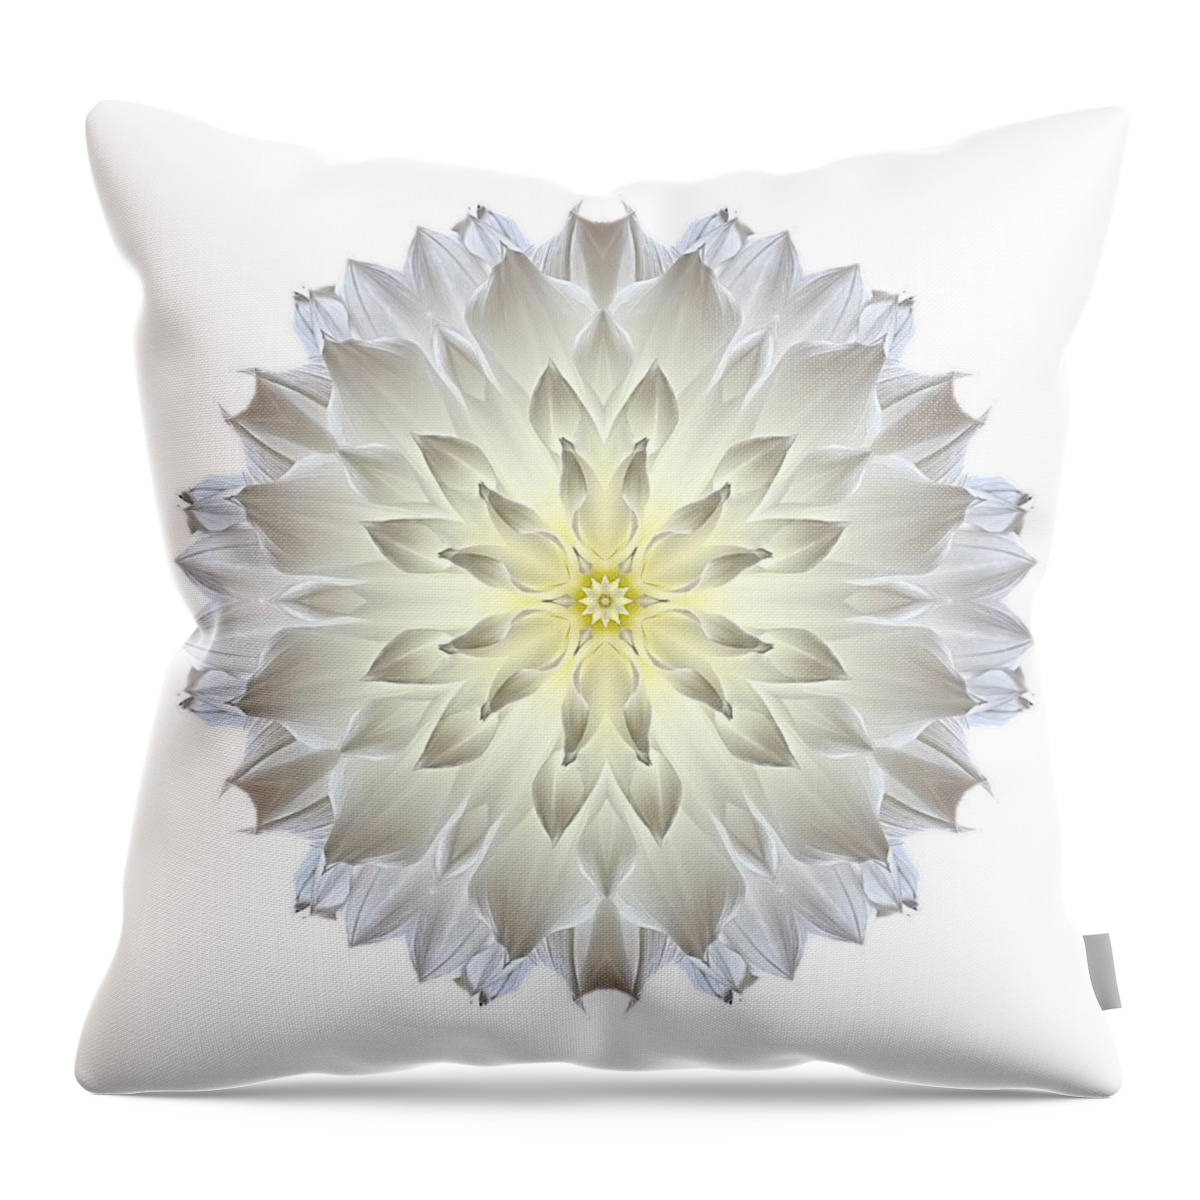 Flower Throw Pillow featuring the photograph Giant White Dahlia I Flower Mandala White by David J Bookbinder